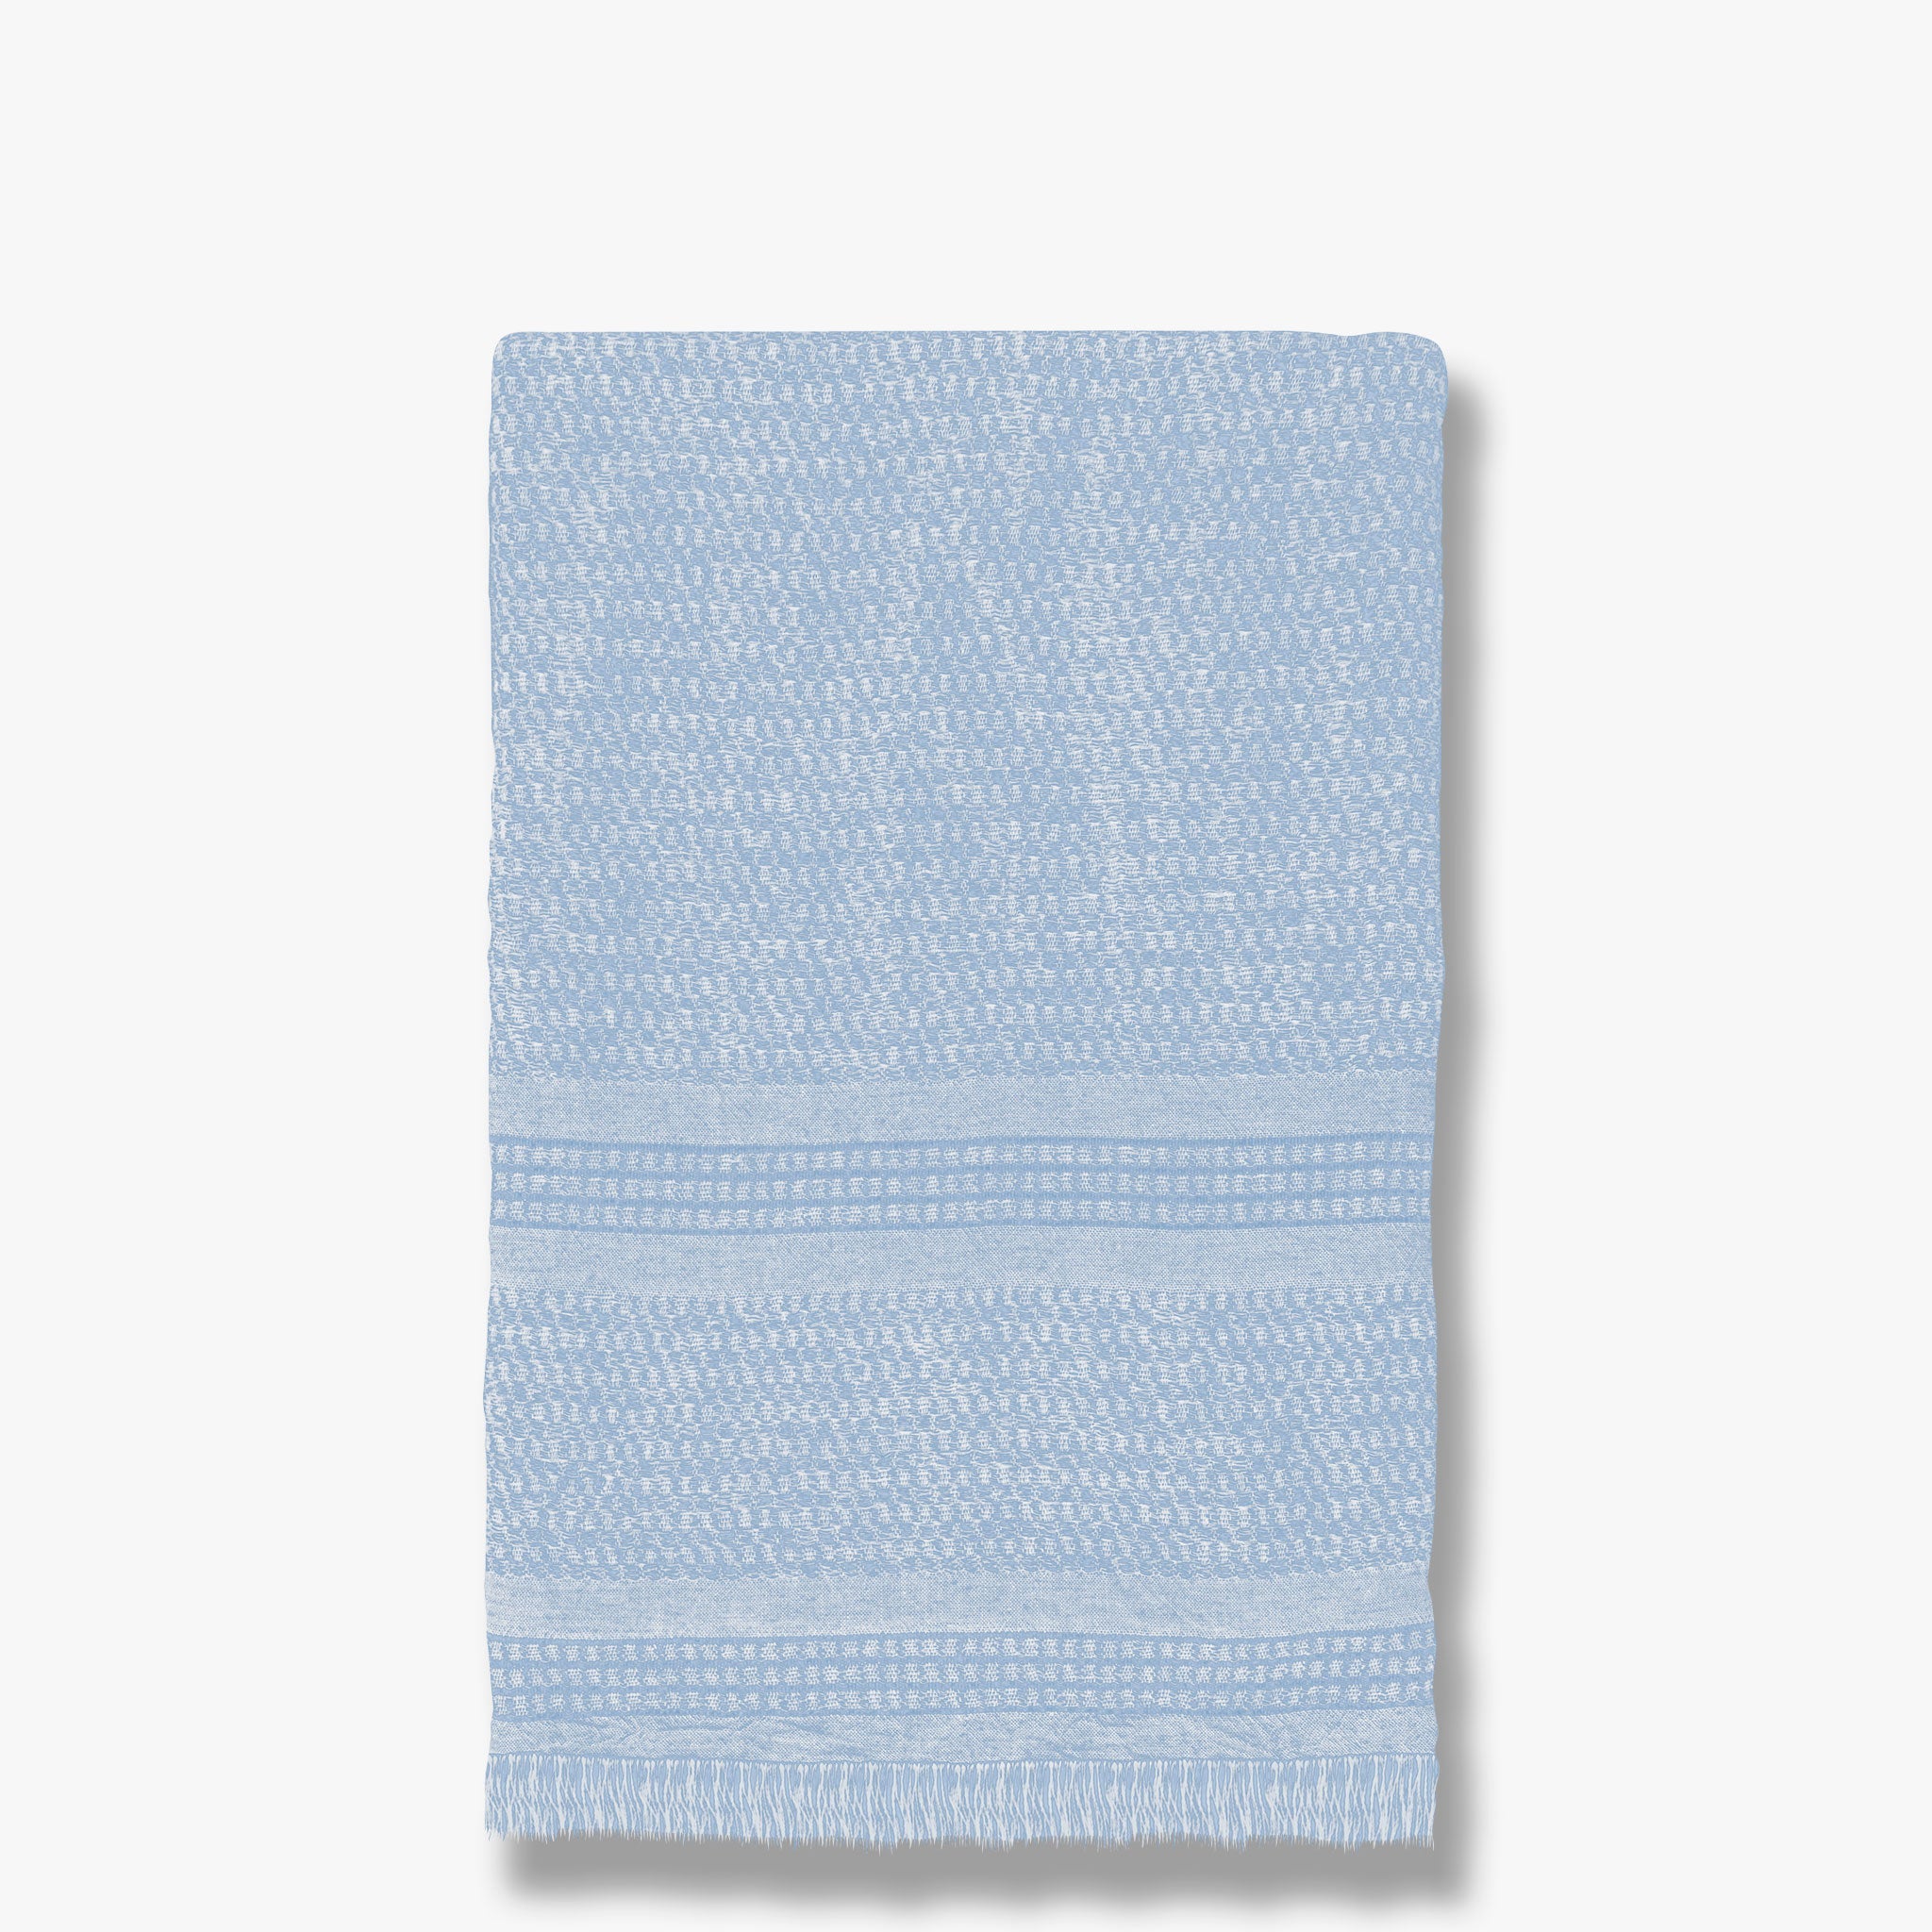 Ditmer - BODUM Light Towel, – blue Mette International